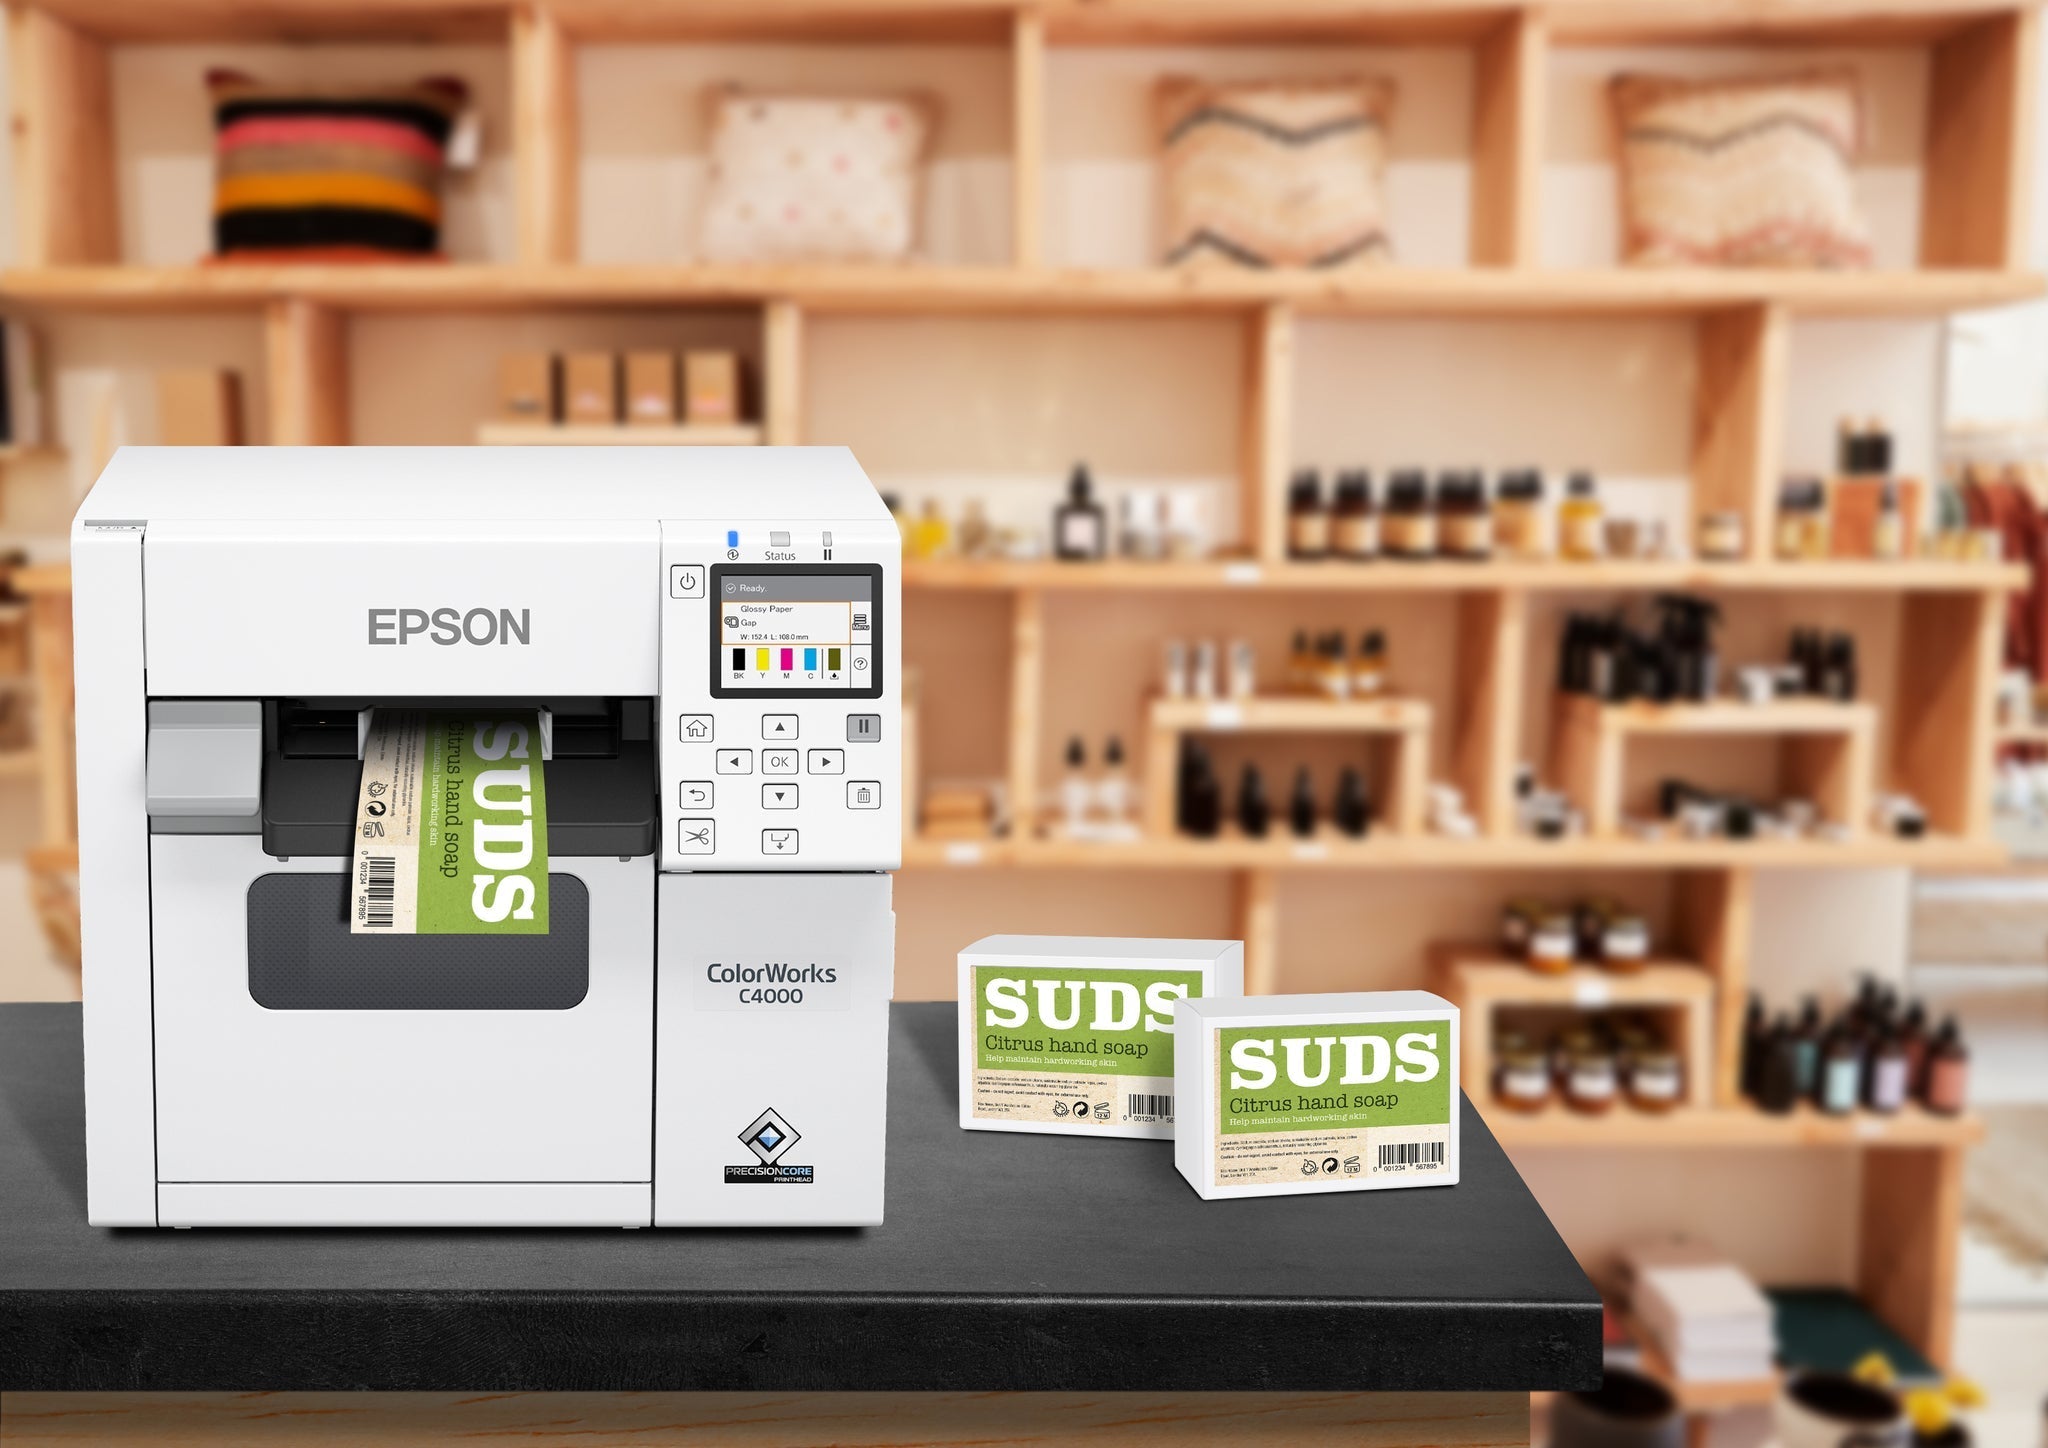 Impresora de etiquetas a color inkjet Epson ColorWorks® Serie CW-C4000